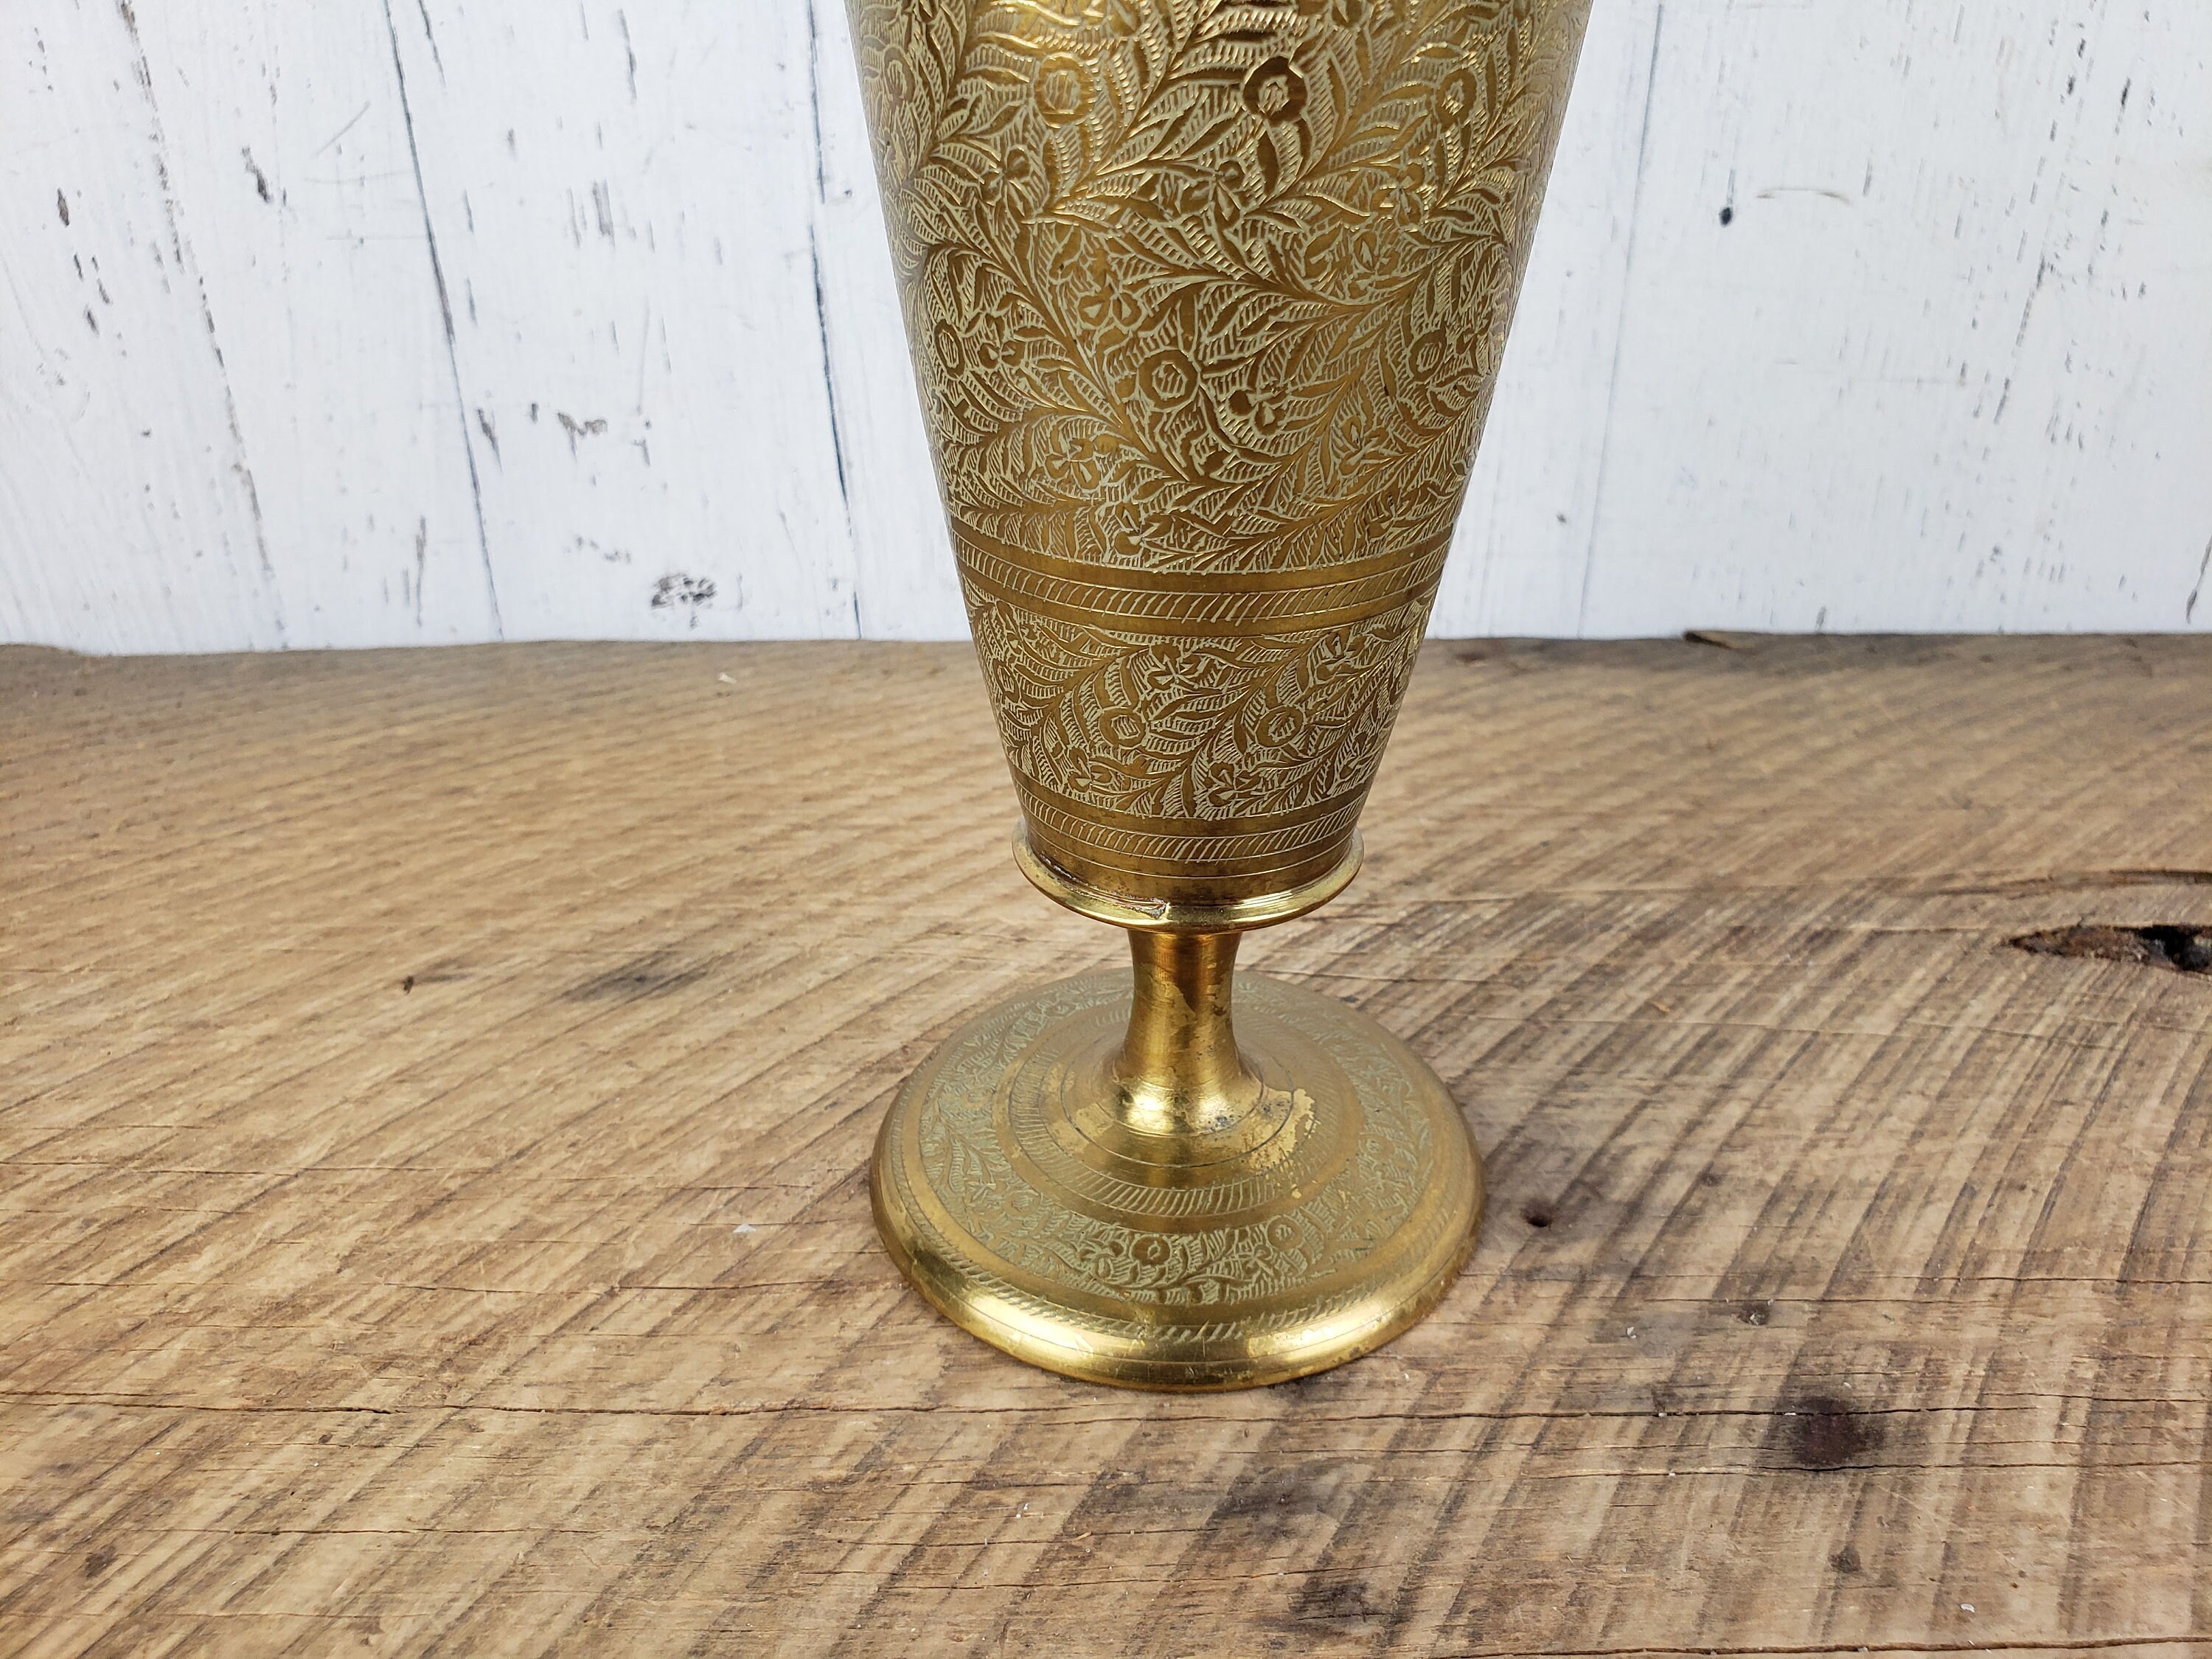 Brass Flower Vase - 24 inch - WL3110 - WL3110 at Rs 6,246.65